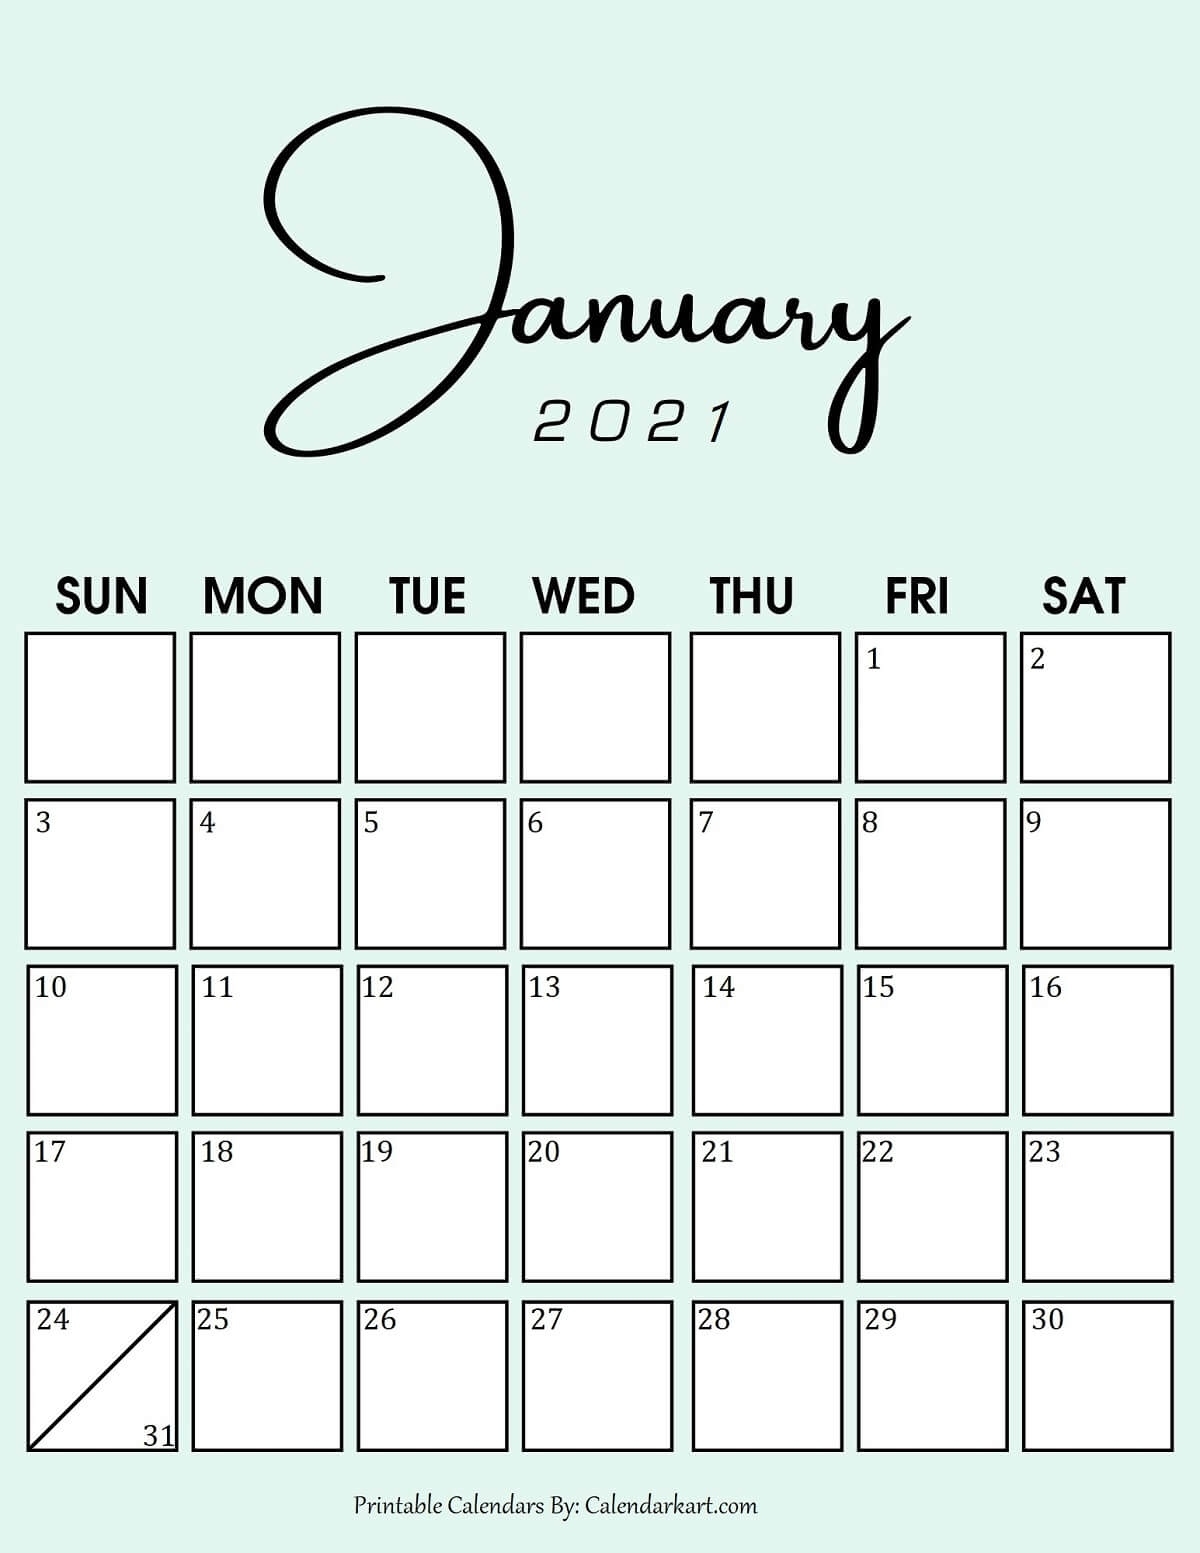 7 Cute And Stylish Free Printable January 2021 Calendar 2021 Calendar Cute